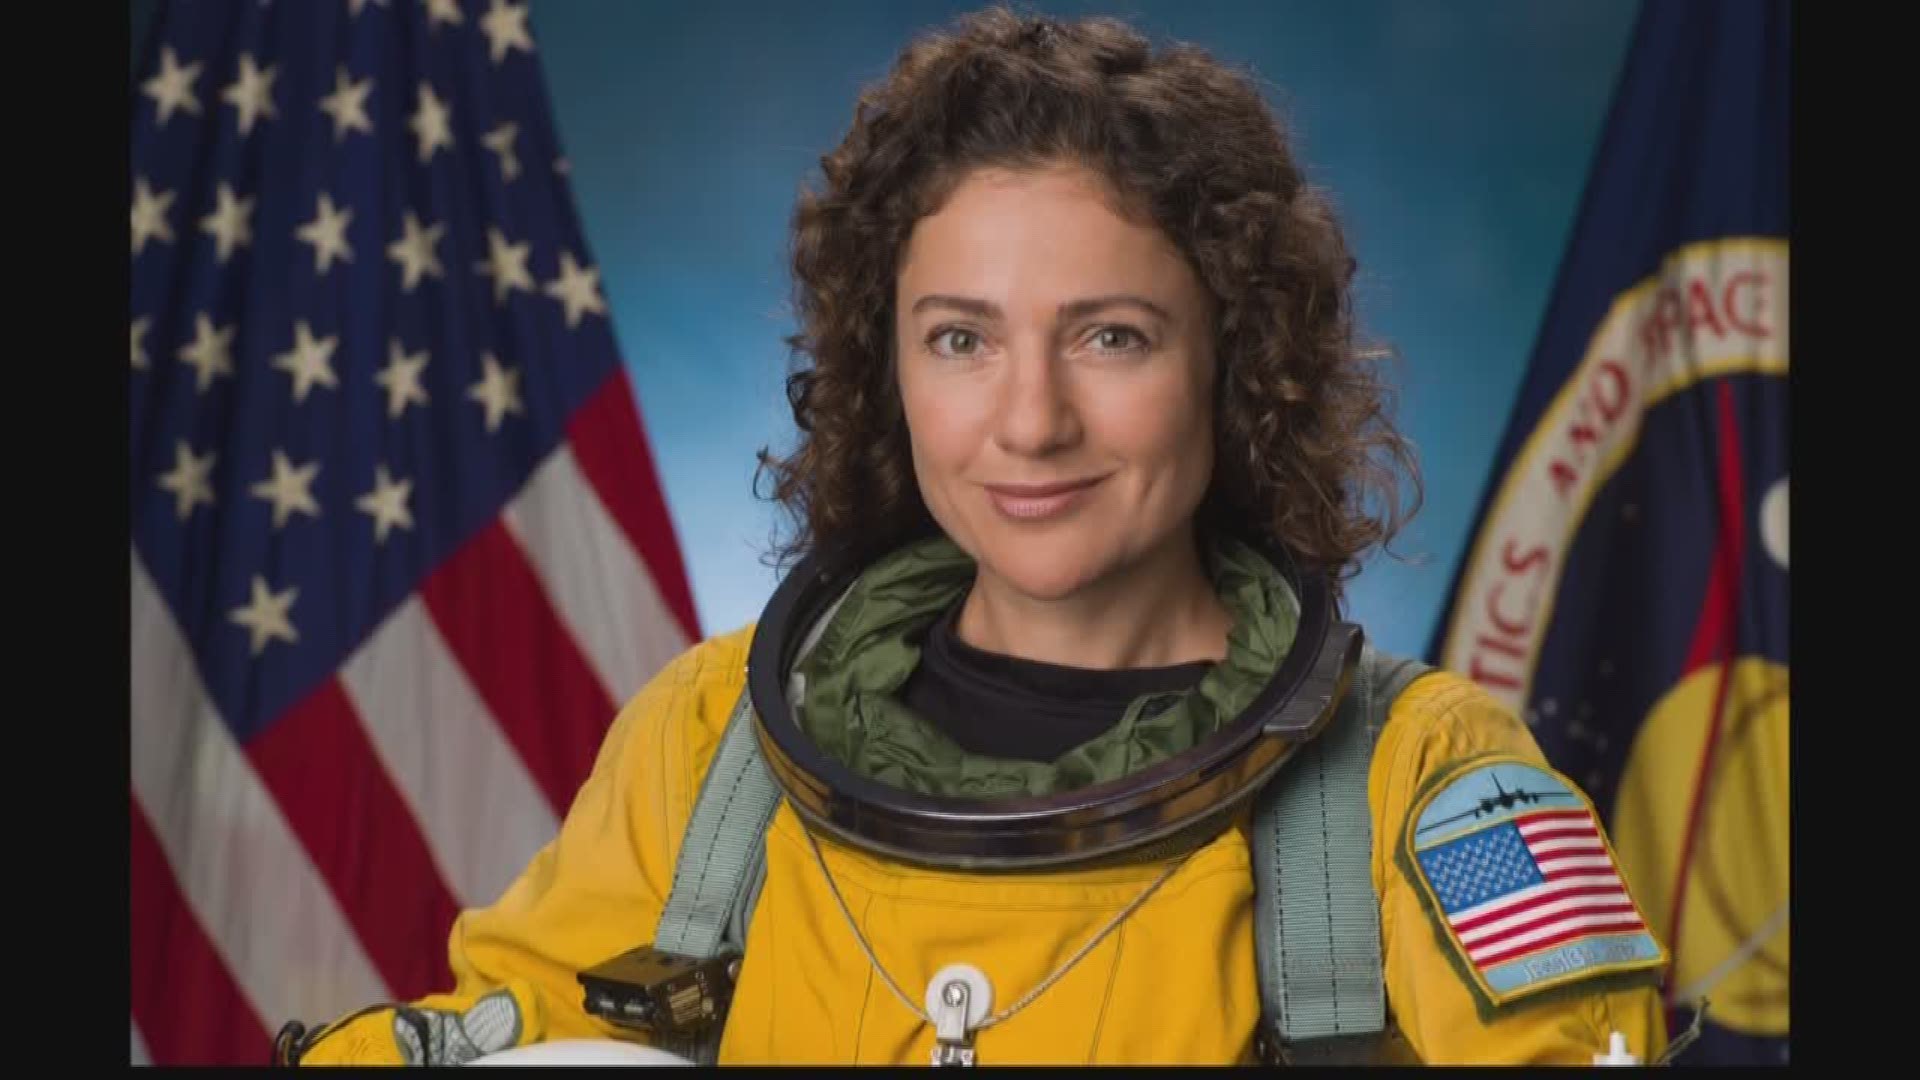 Astronaut and Caribou native Jessica Meir